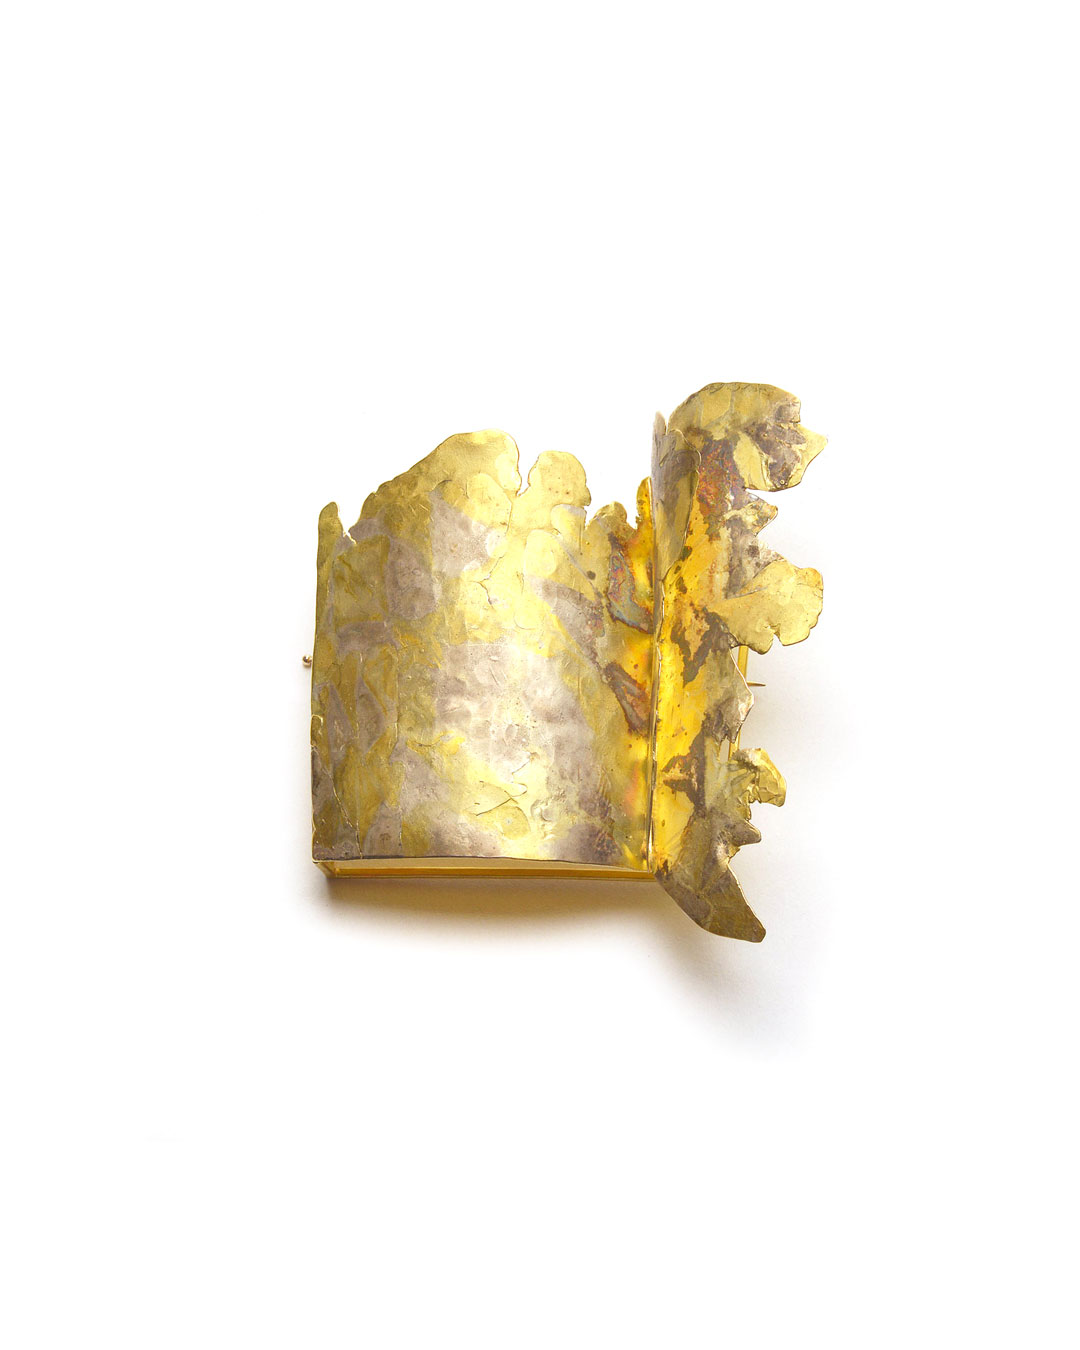 Stefano Marchetti, untitled, 2004, brooch; gold, silver, 60 x 60 x 25 mm, €8500